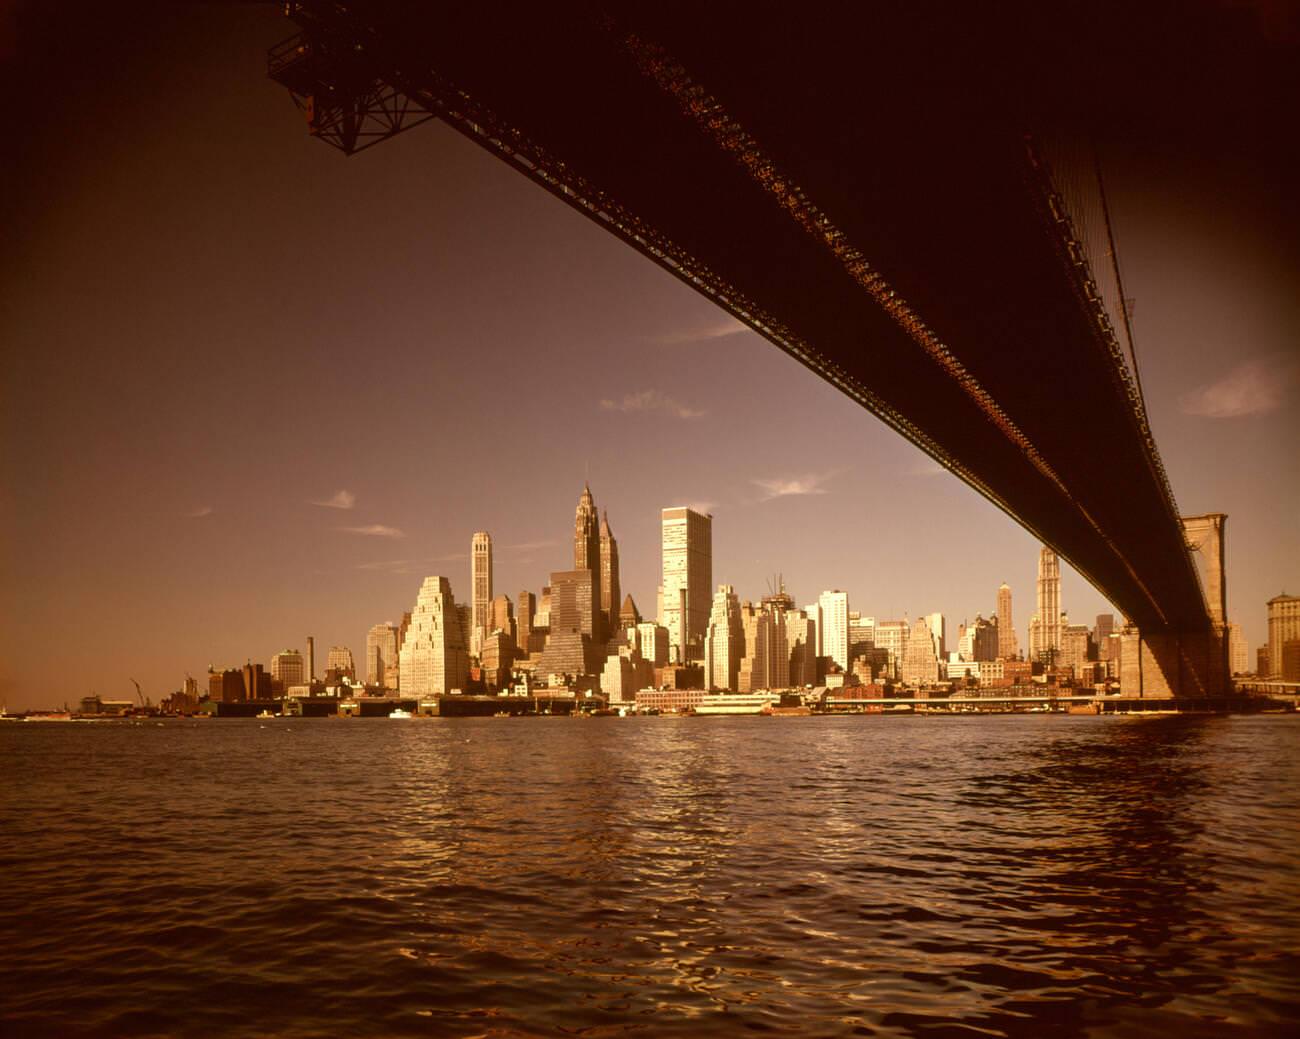 Construction Crane Of The World Trade Center Visible Under The Brooklyn Bridge, 1969.